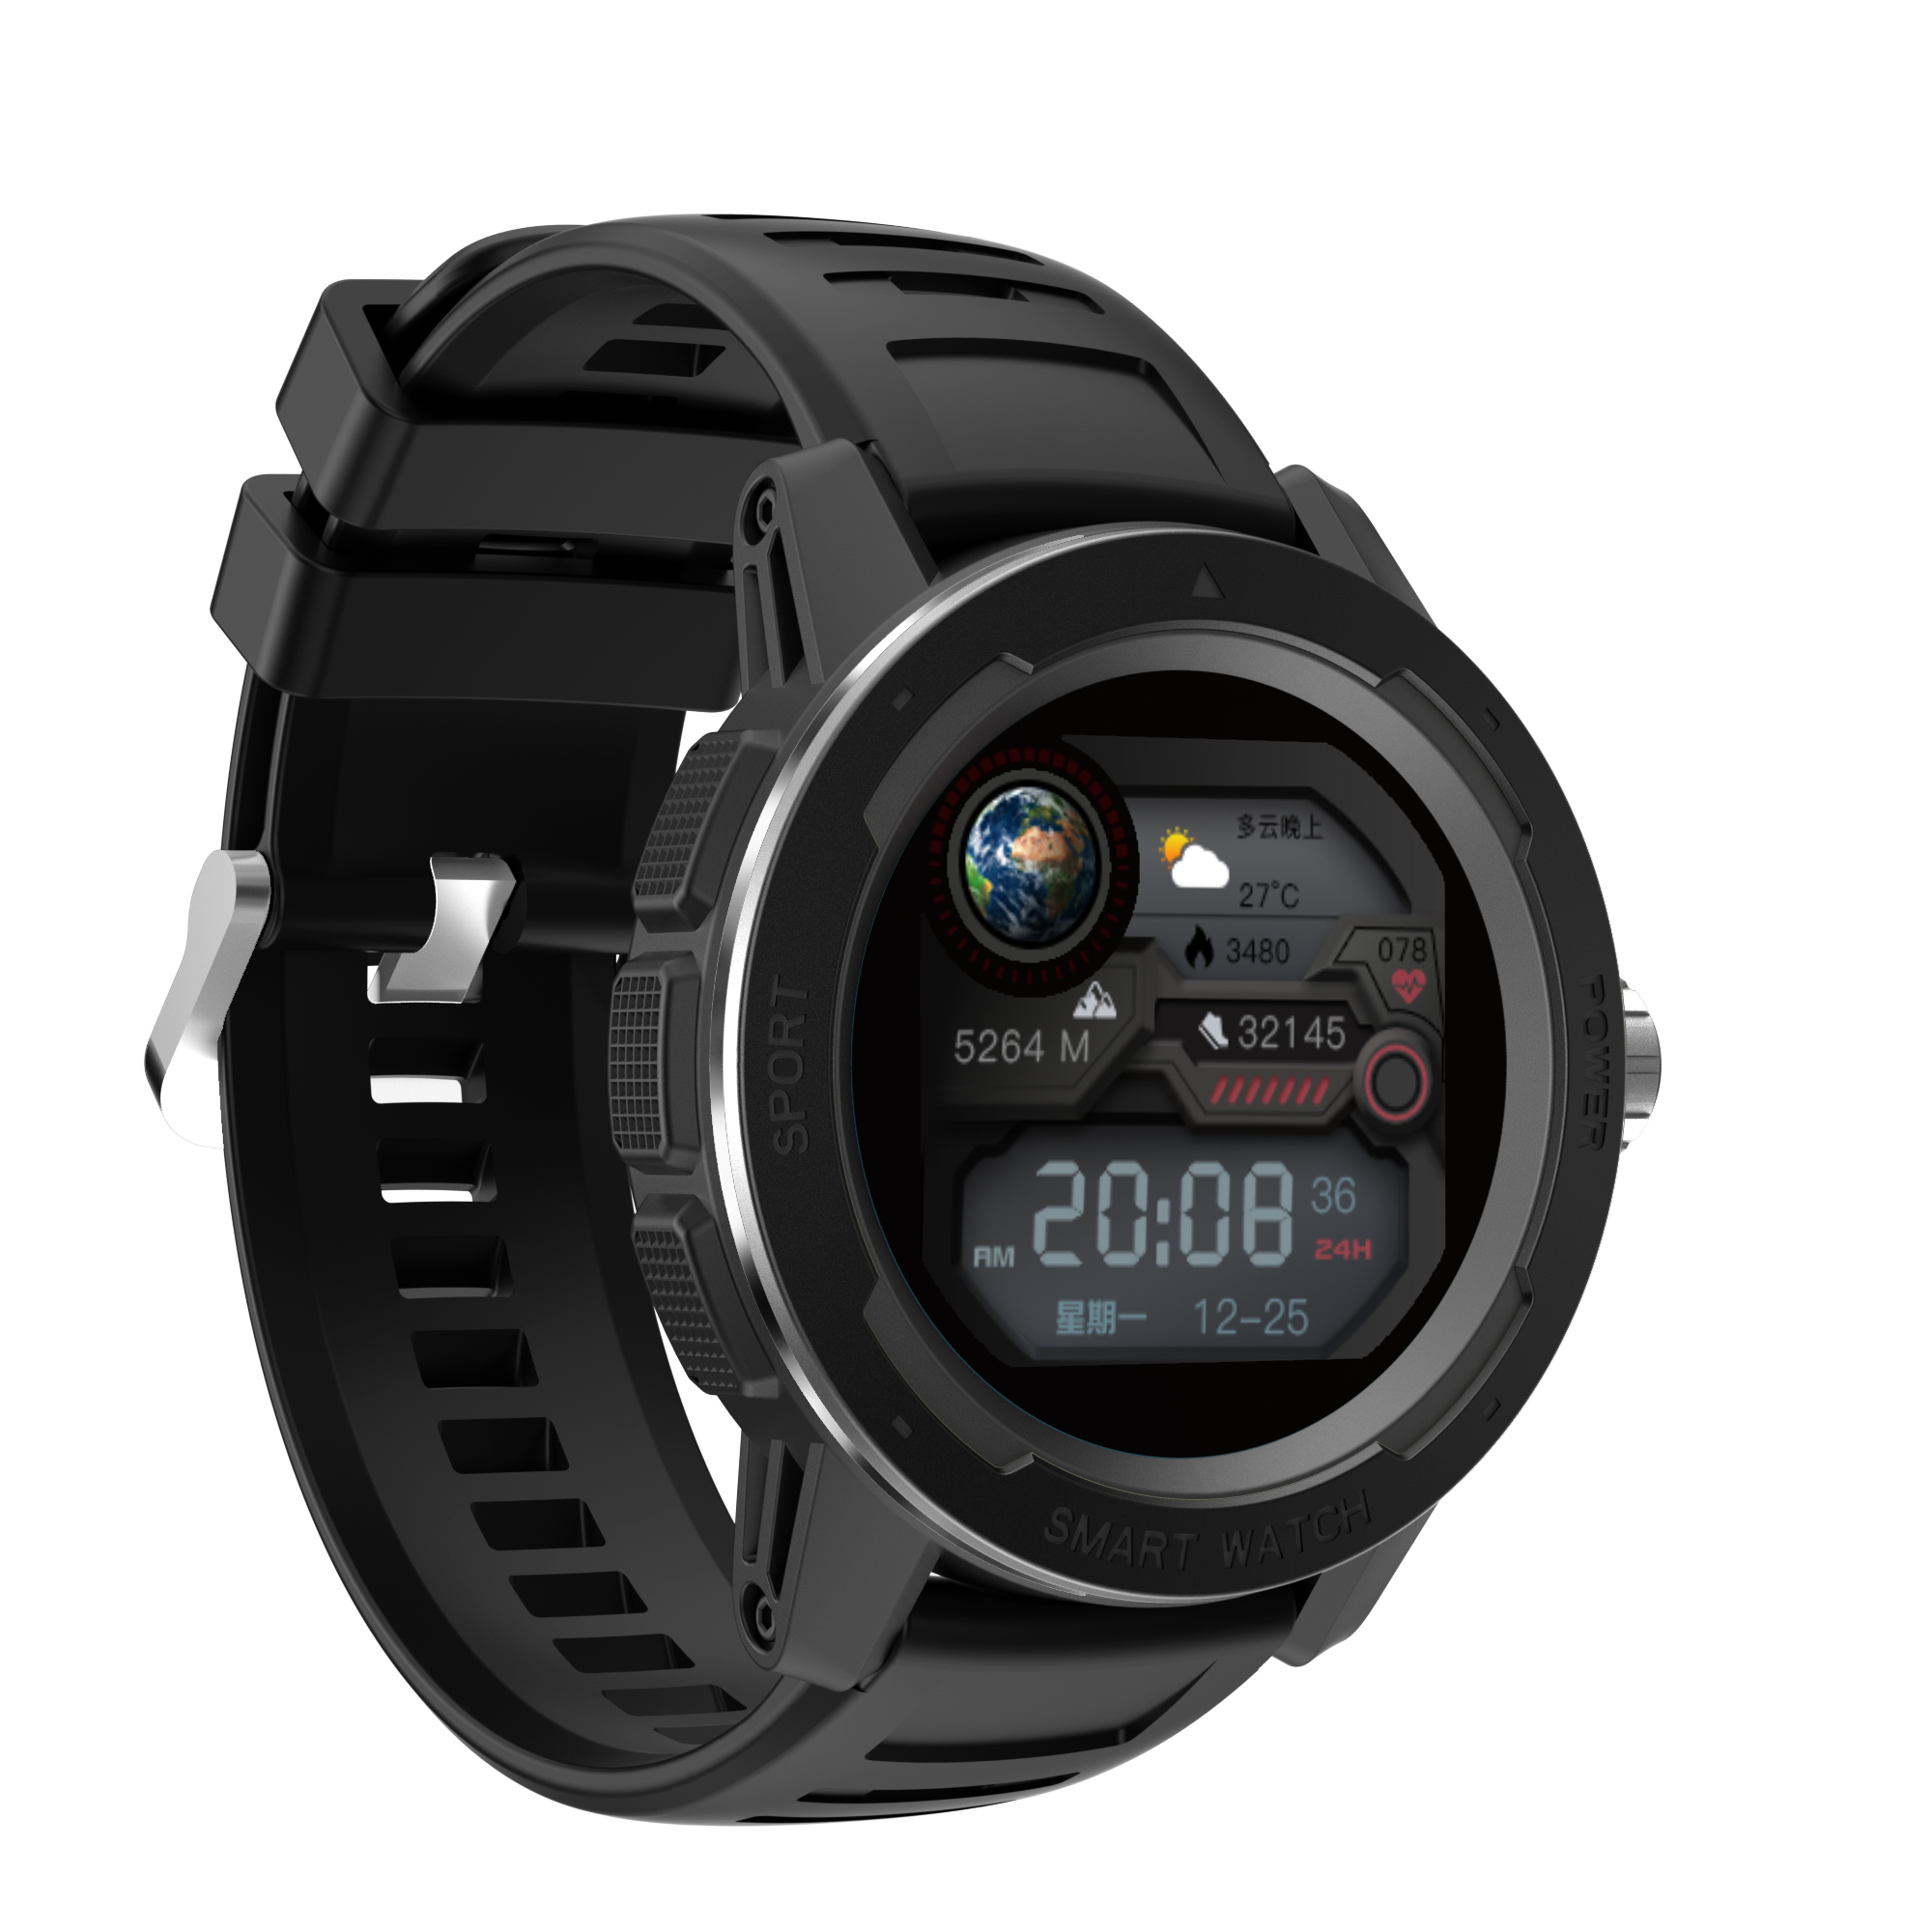 New Arrival IP68 Waterproof Heart rate BP bluetooth Smart watch